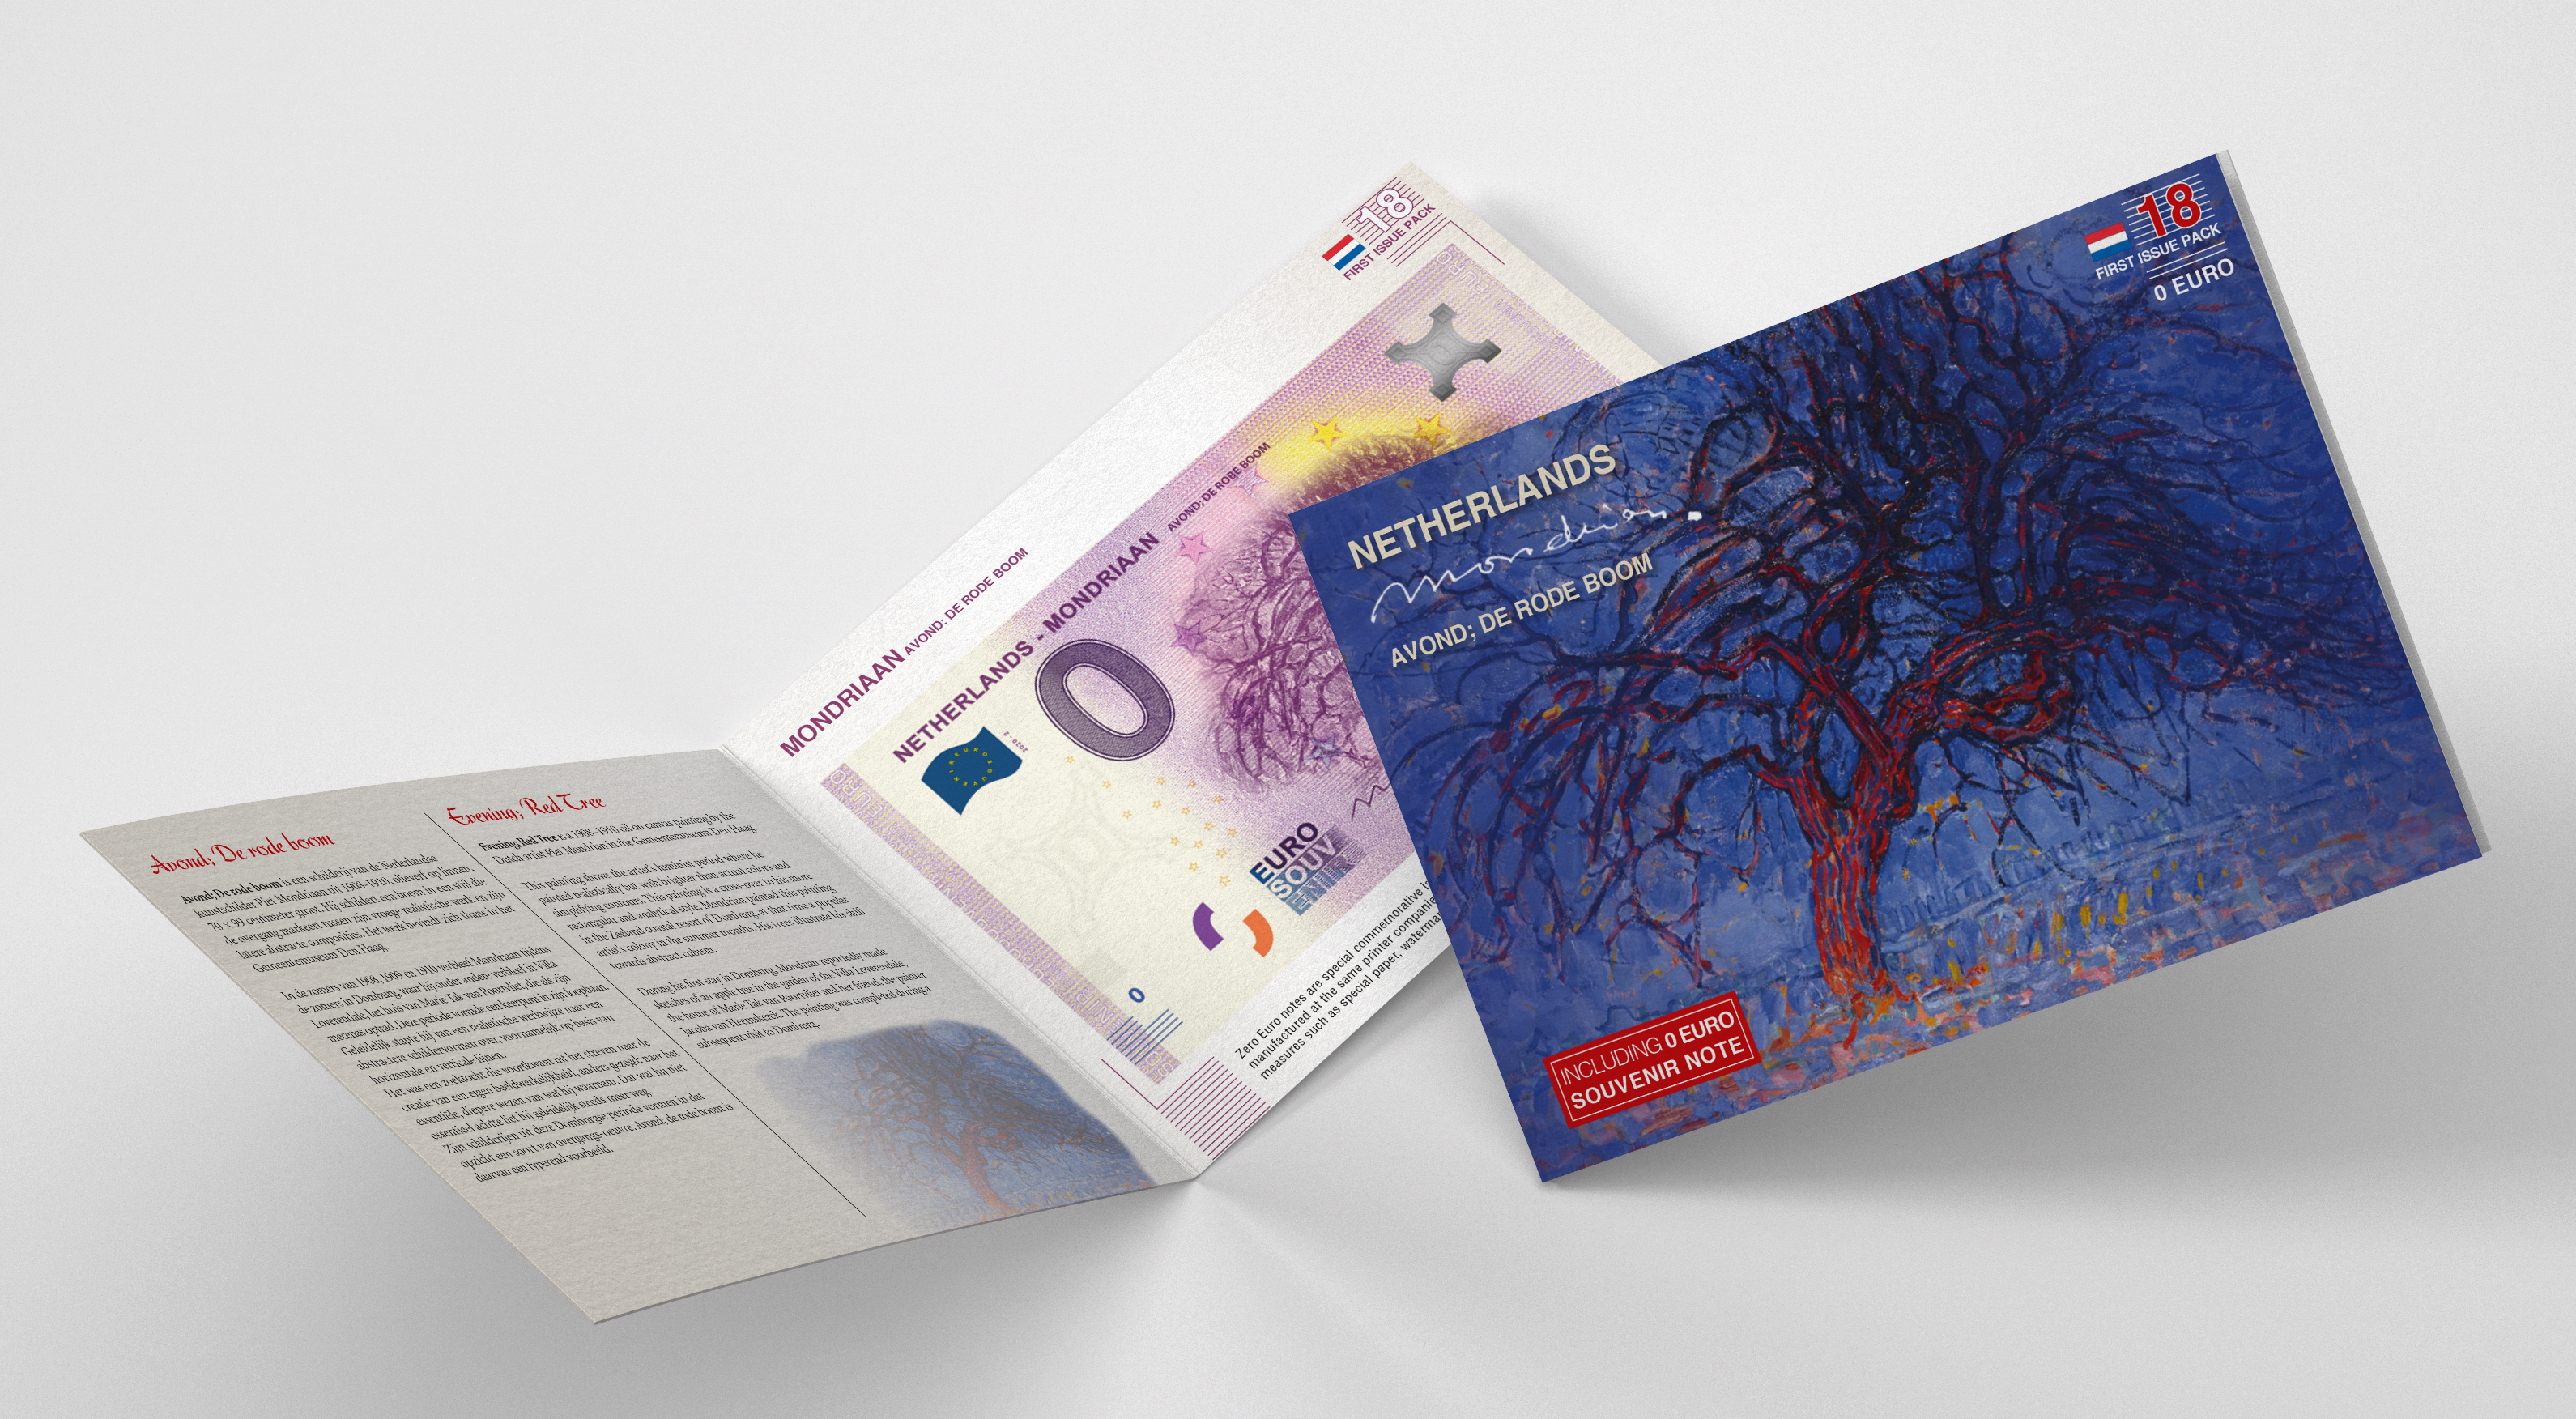 0 Euro biljet Nederland 2020 - Mondriaan Avond de rode boom LIMITED EDITION FIP#18